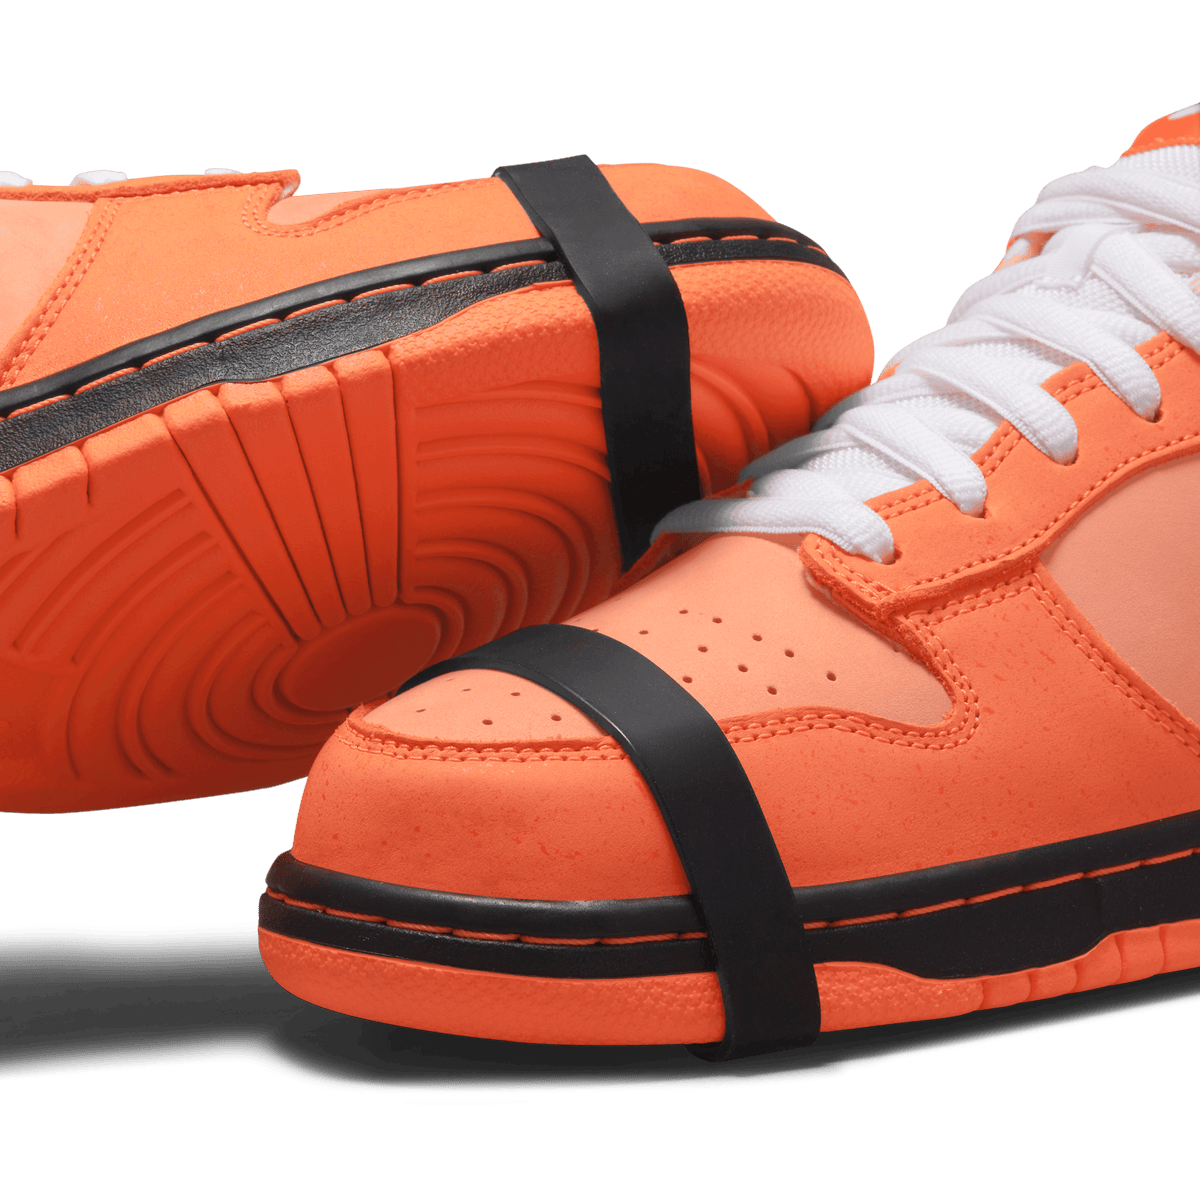 Найк лобстер. Nike Dunk Orange Lobster. Nike SB Dunk Orange Lobster. Nike Lobster Orange. Nike Dunk Low Lobster Orange.